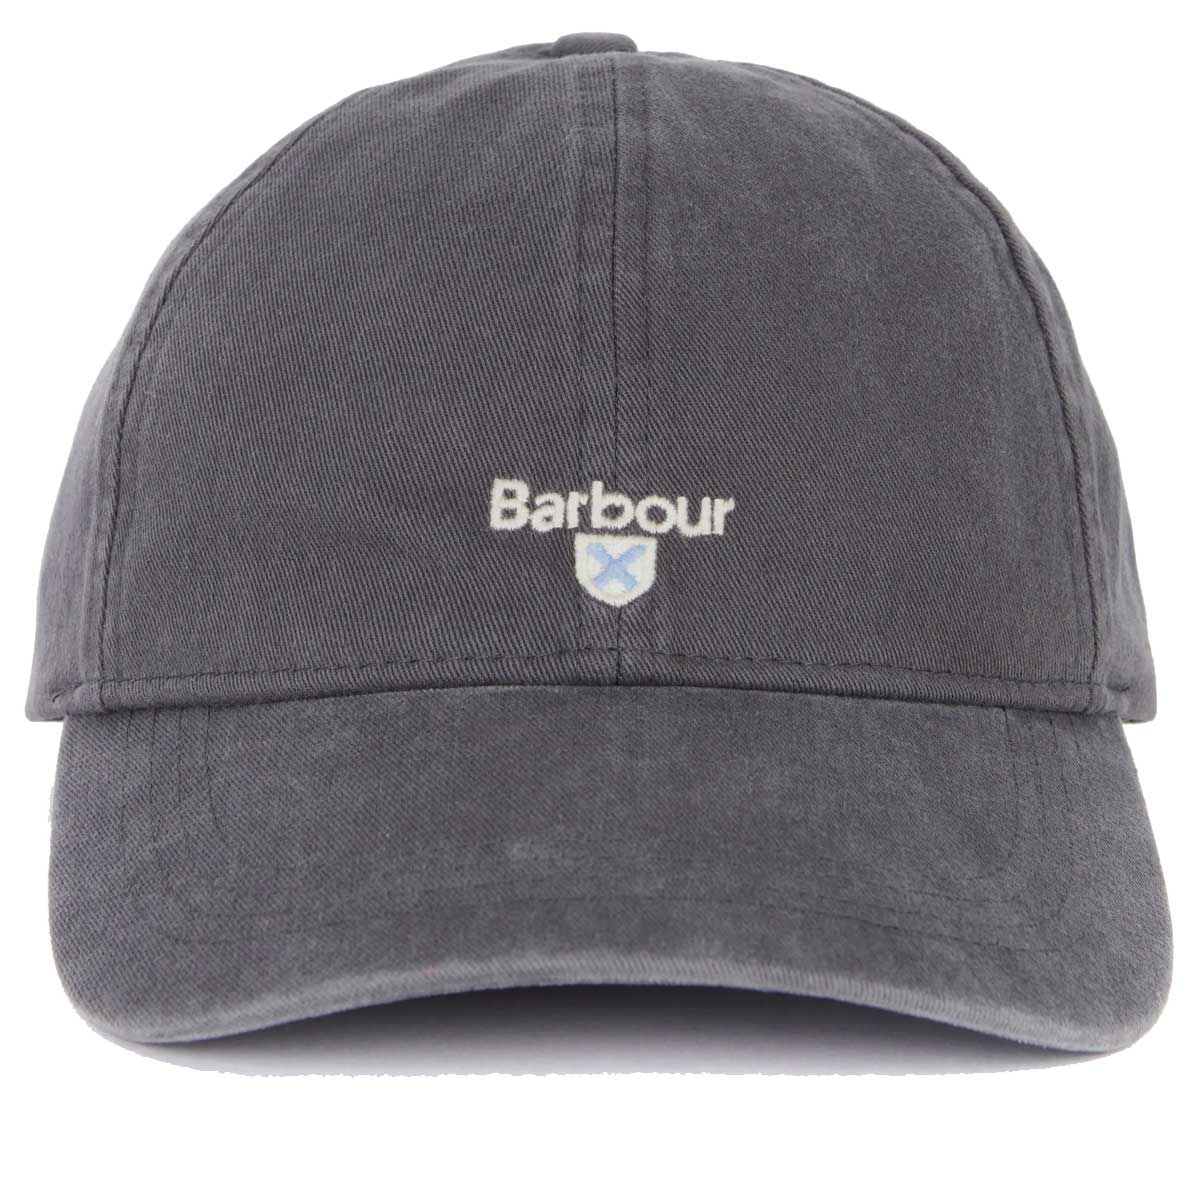 BARBOUR Cascade Sports Cap - Asphalt